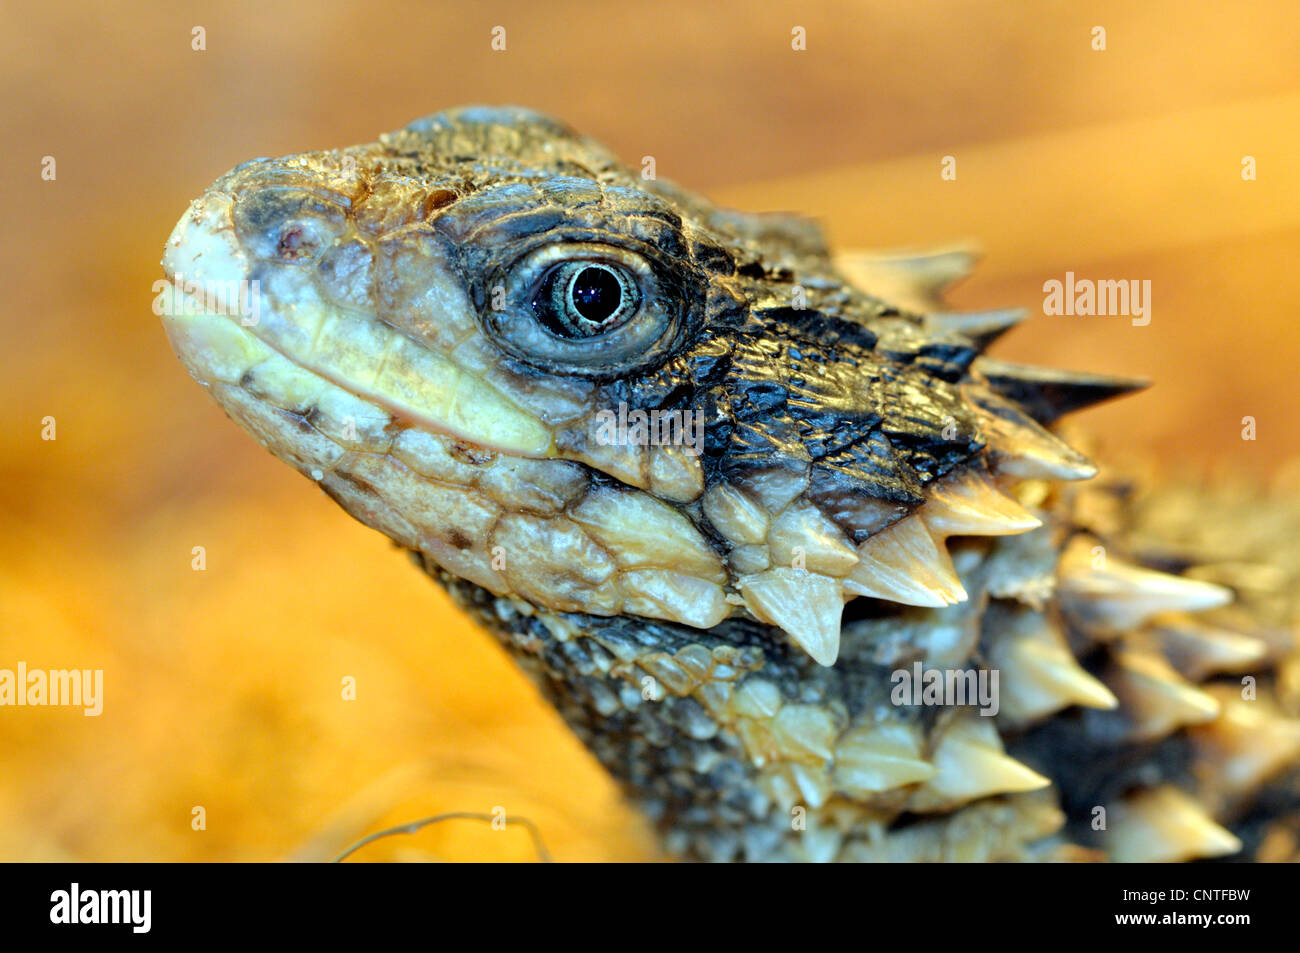 sungazer, giant girdled lizard, giant zonure, giant spinytail lizard (Cordylus giganteus), portrait Stock Photo